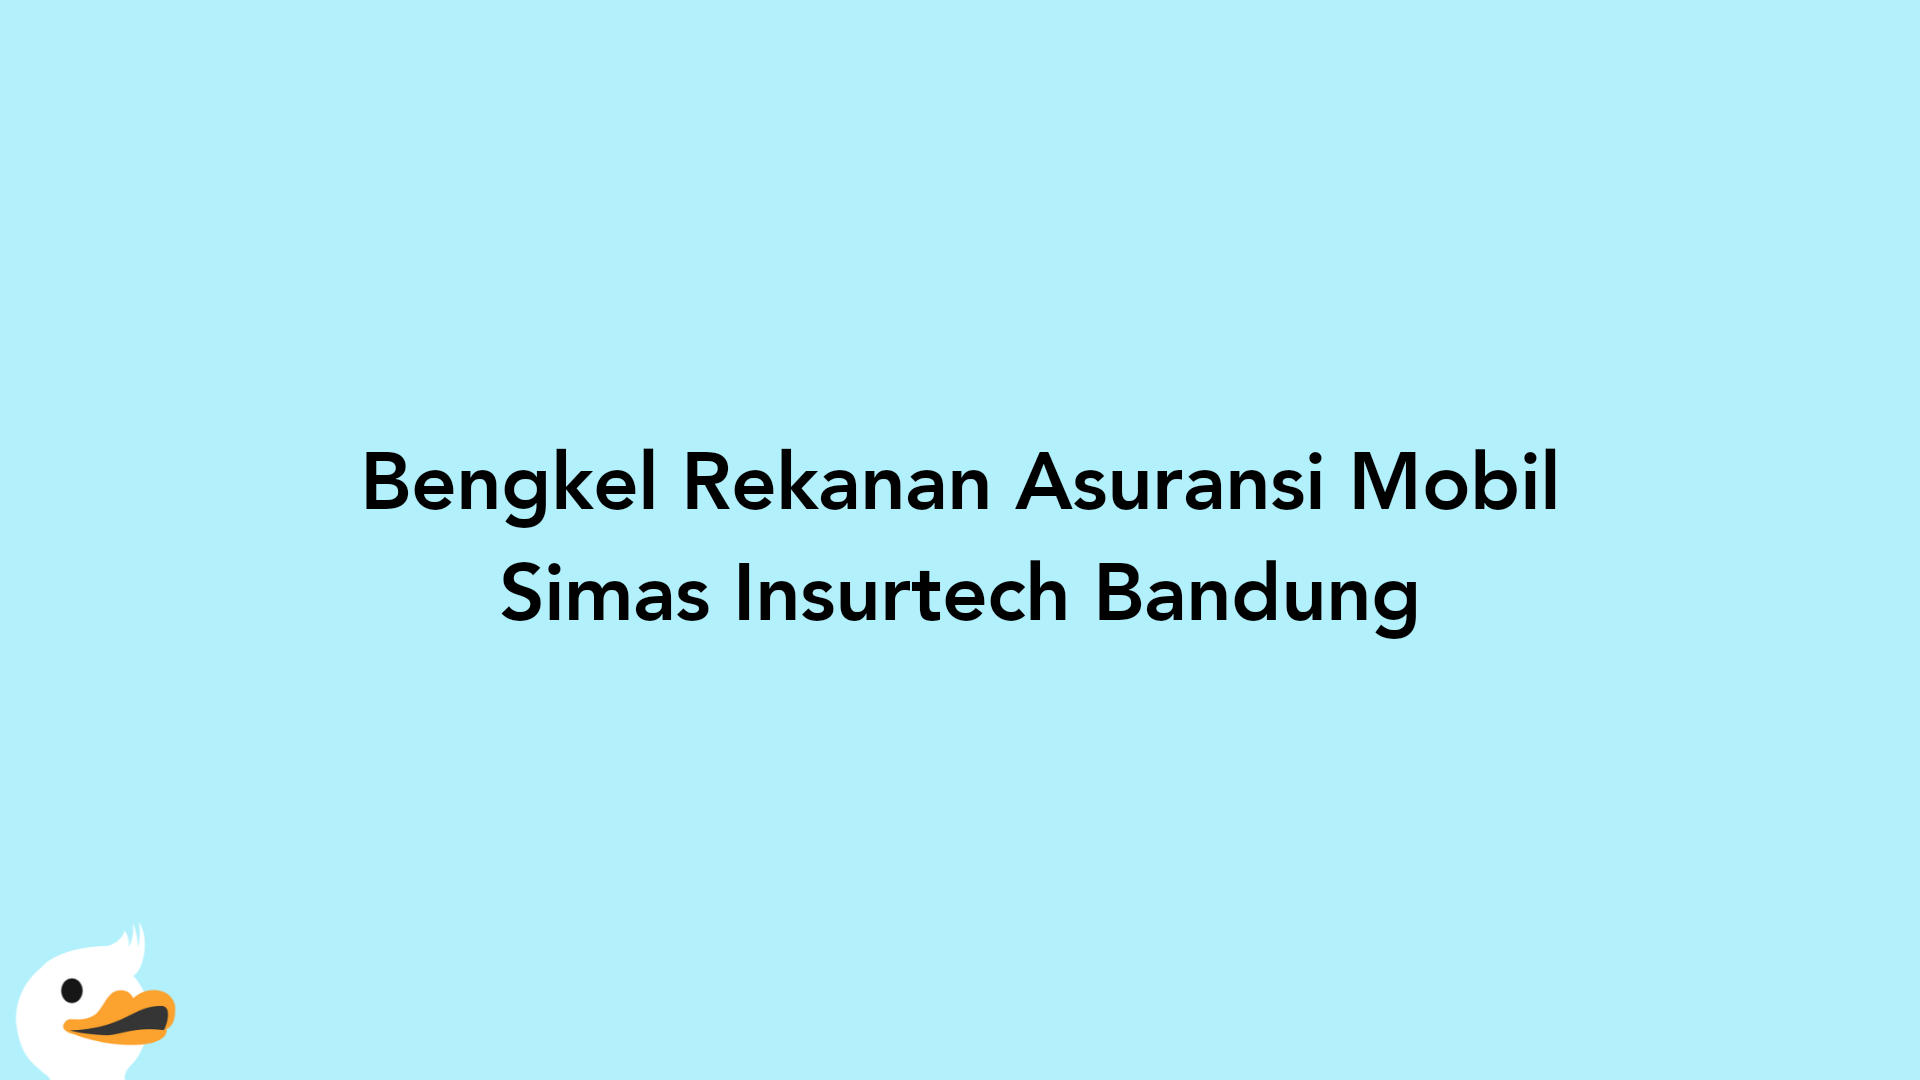 Bengkel Rekanan Asuransi Mobil Simas Insurtech Bandung